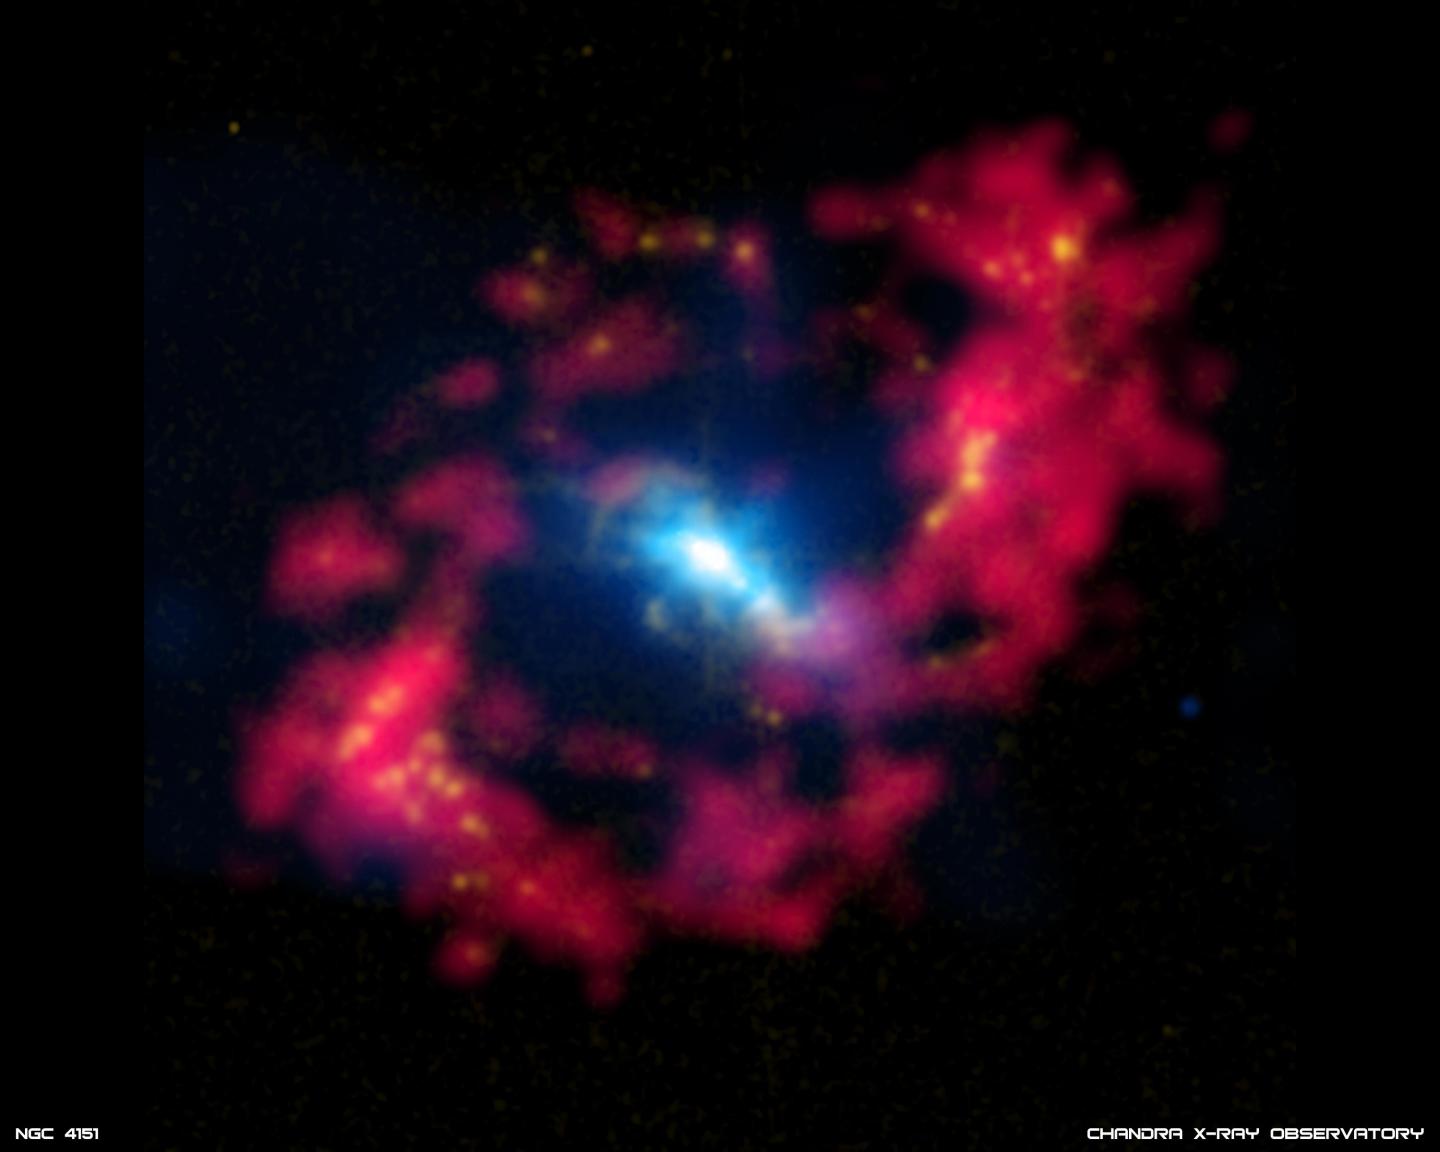 The Galaxy NGC 4151